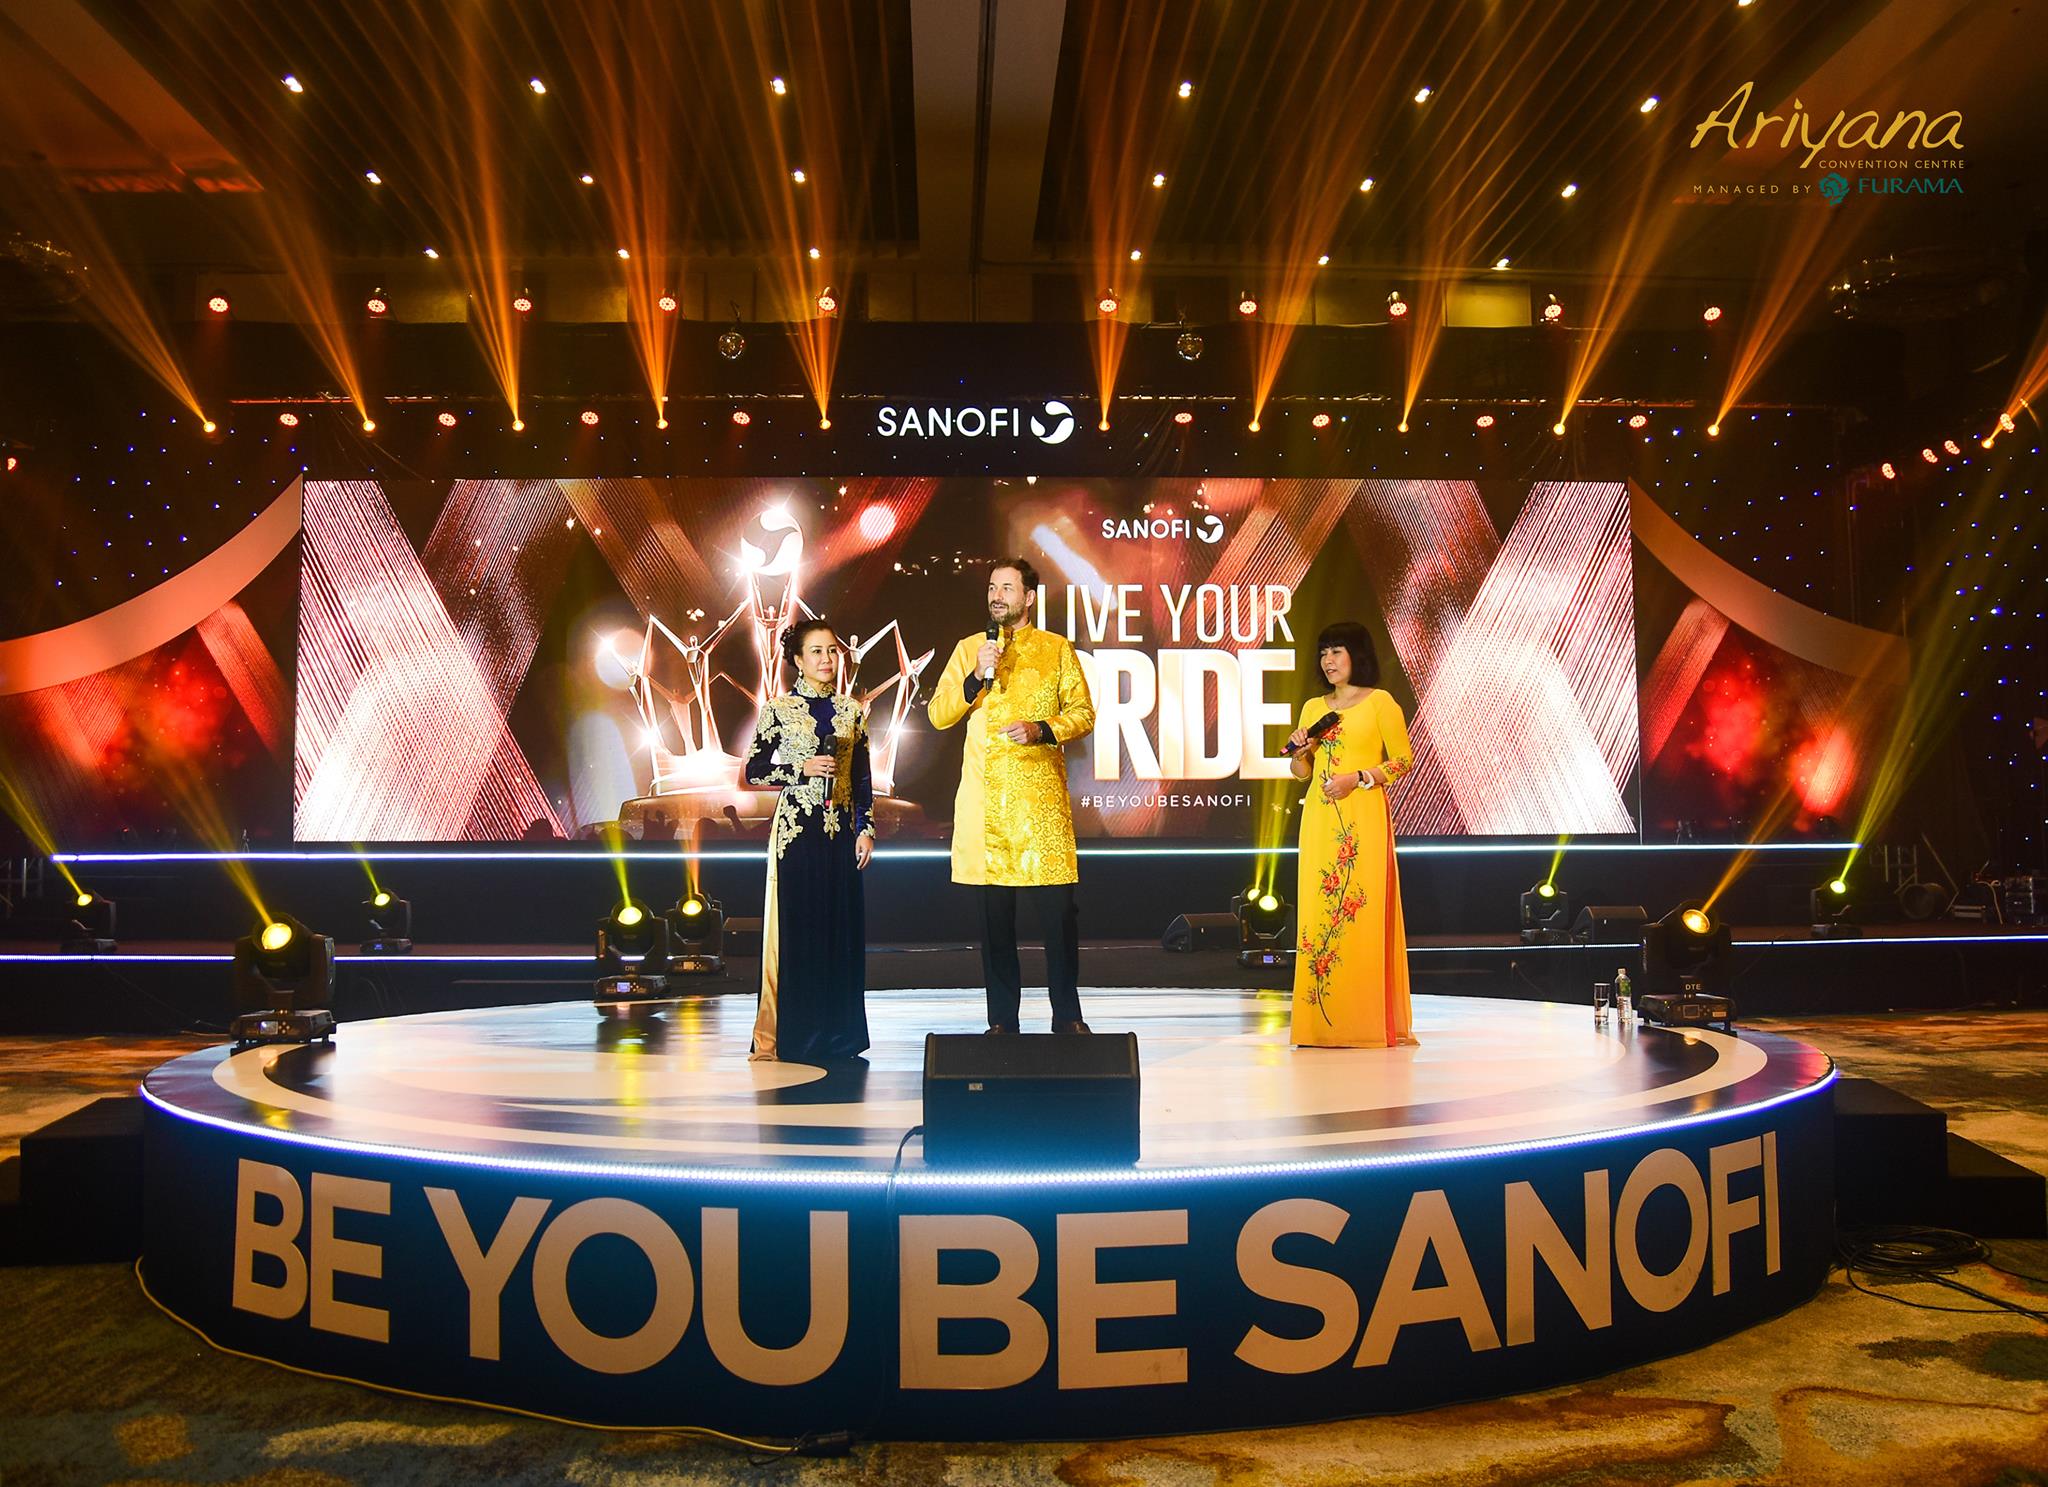 SANOFI ANNUAL MEETING 2019: LIVE YOUR PRIDE